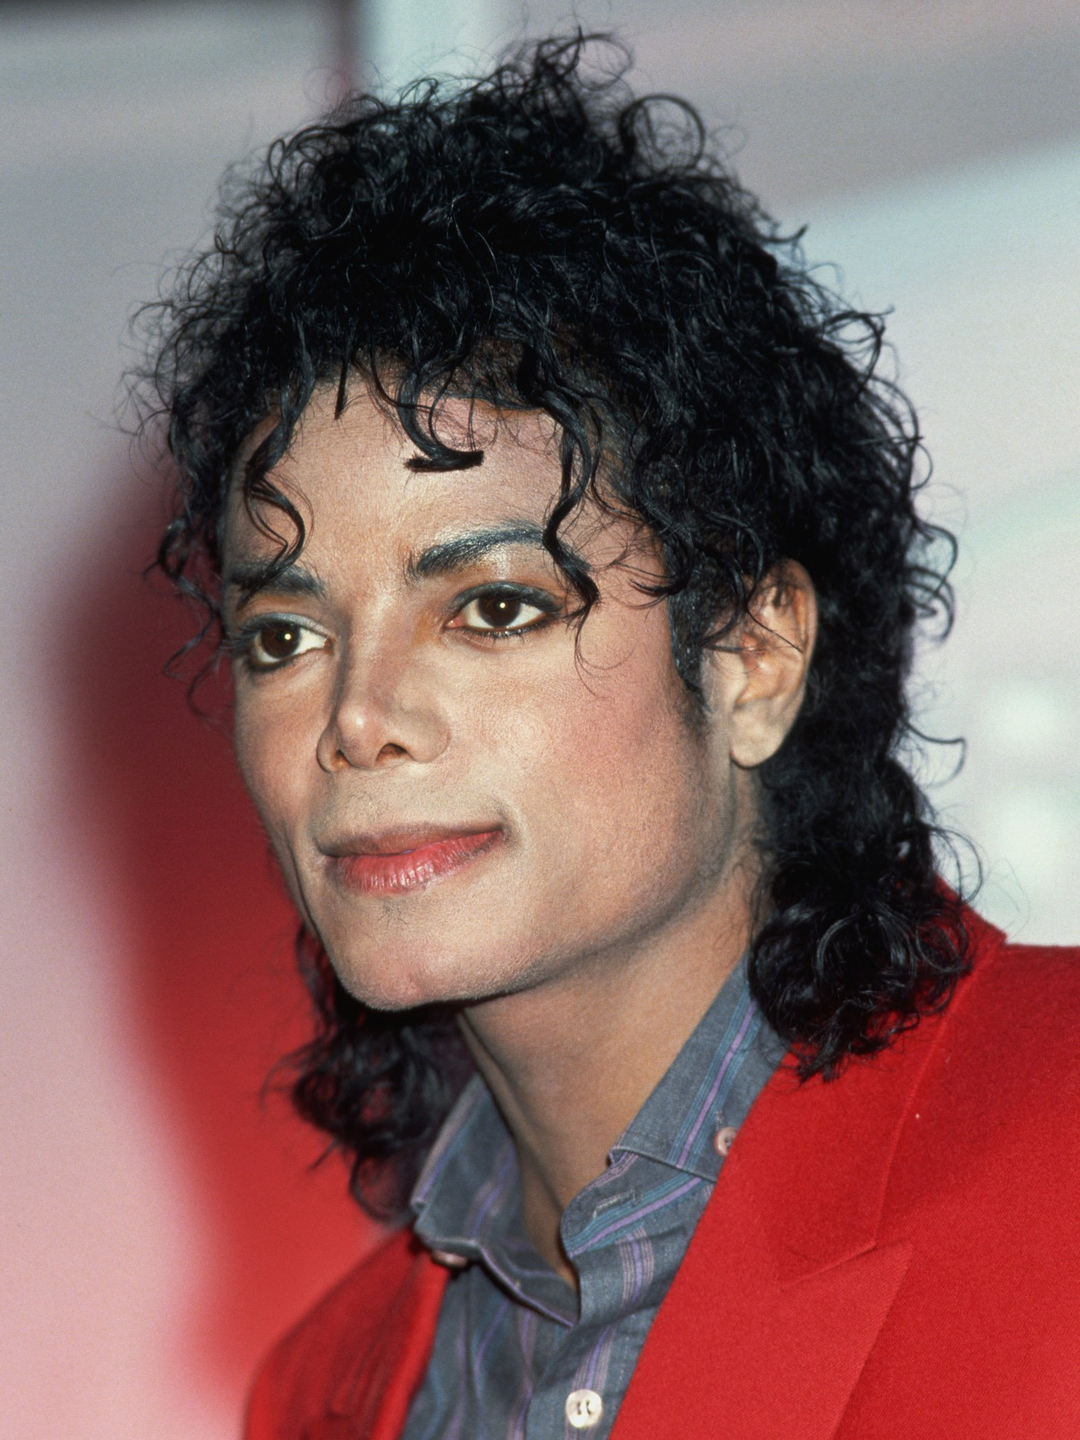 Michael Jackson where did he die